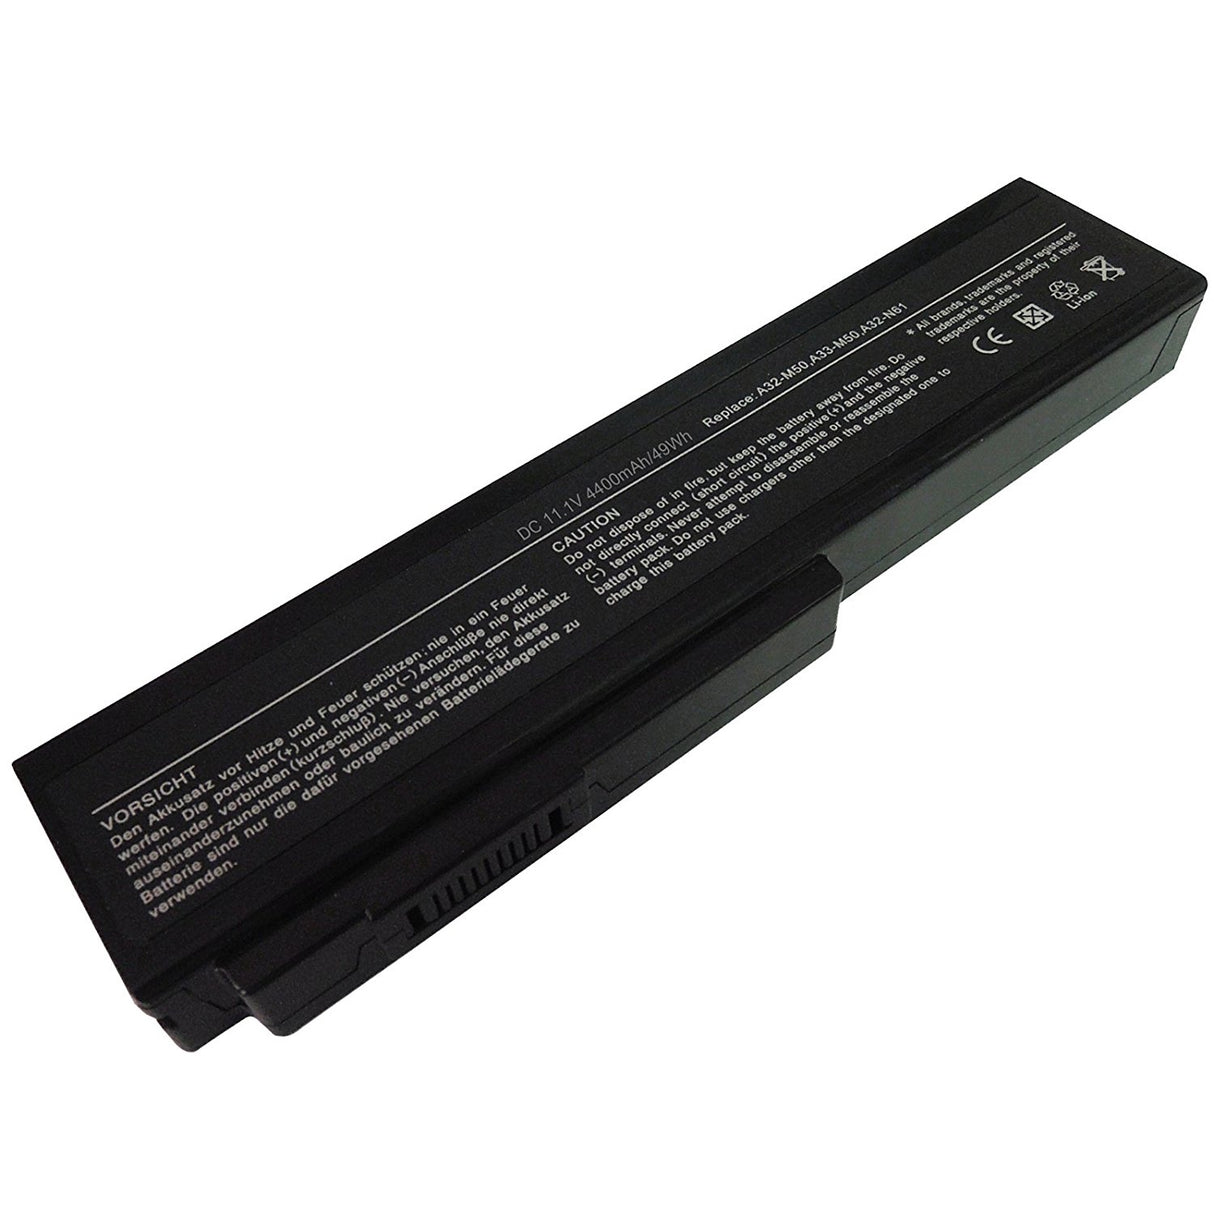 Bateria Compatível para Asus A32-M50 A32-N61 M50L721 A32-X64 5200mAh - Multi4you®